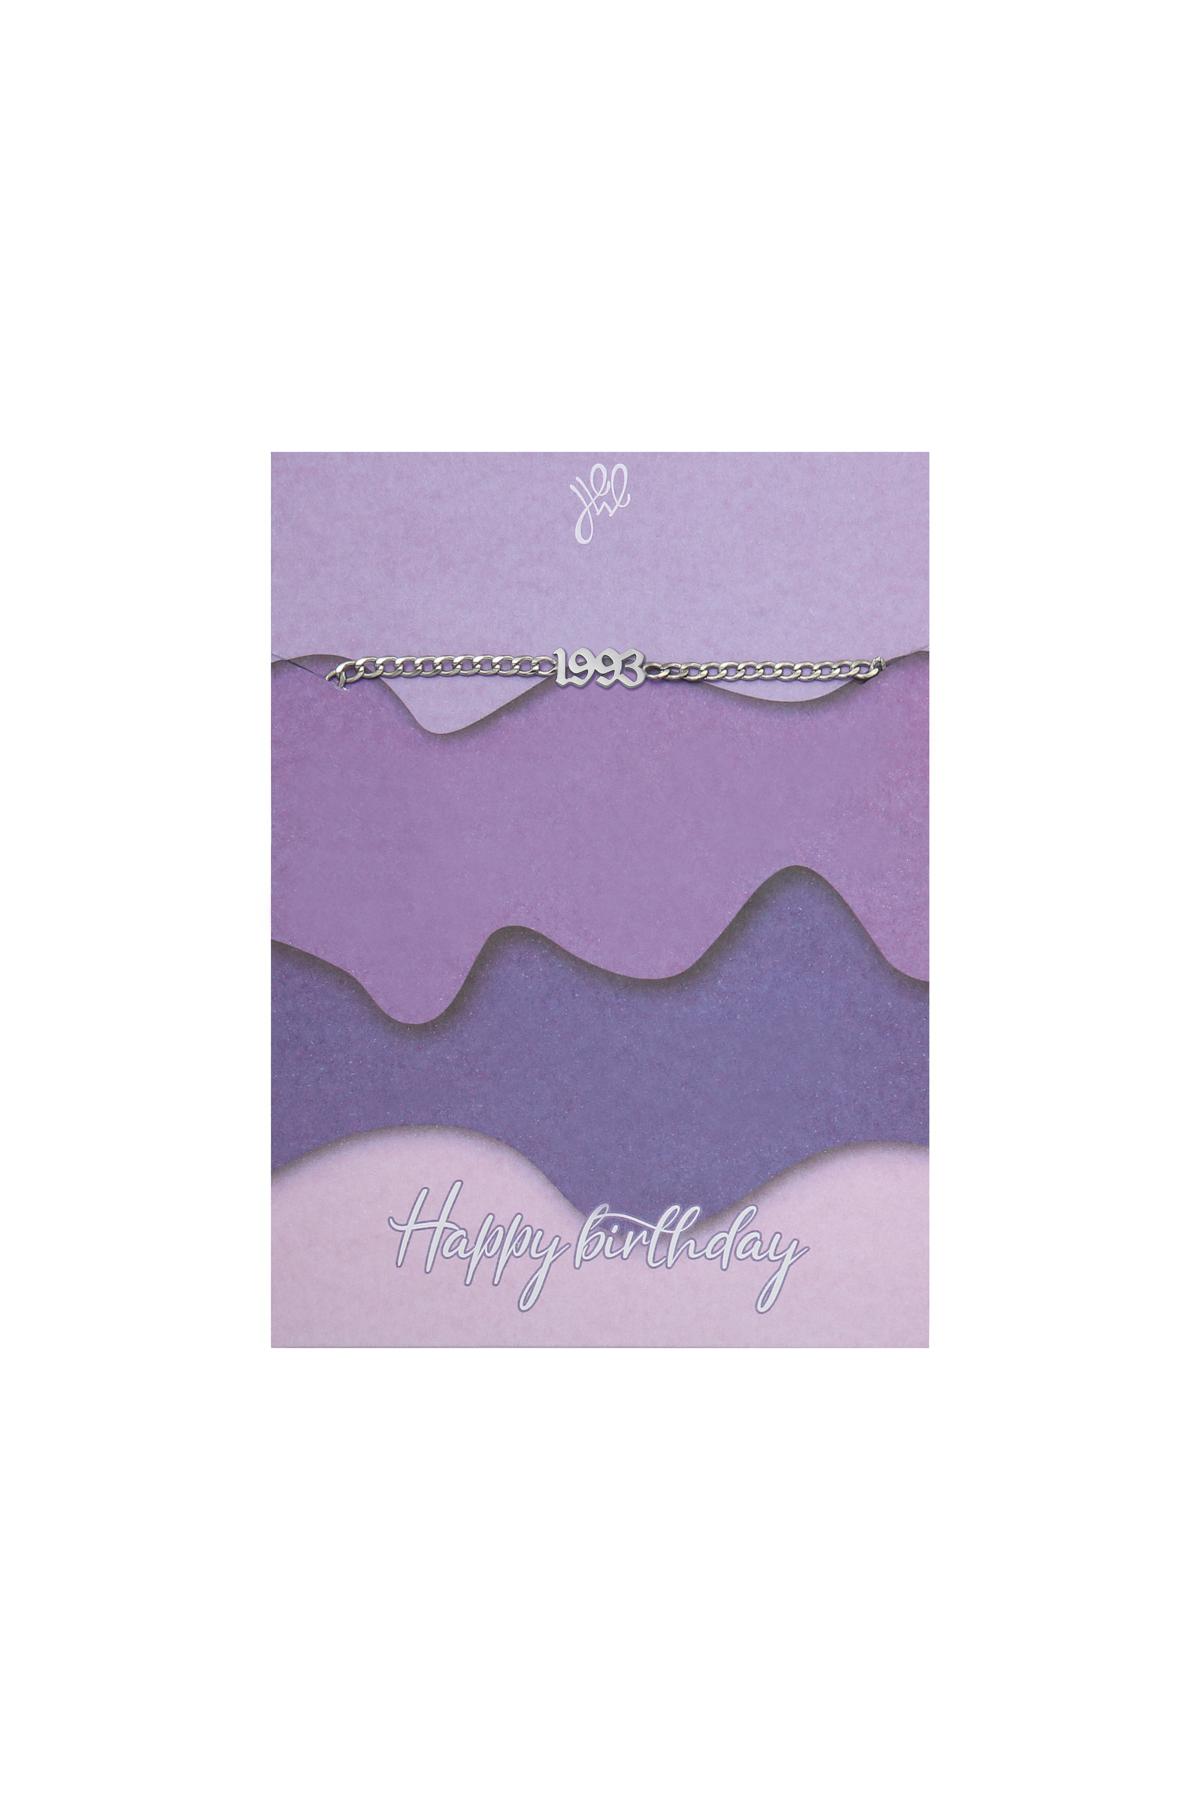 Bracelet Happy Birthday Years - 1993 Silver Stainless Steel